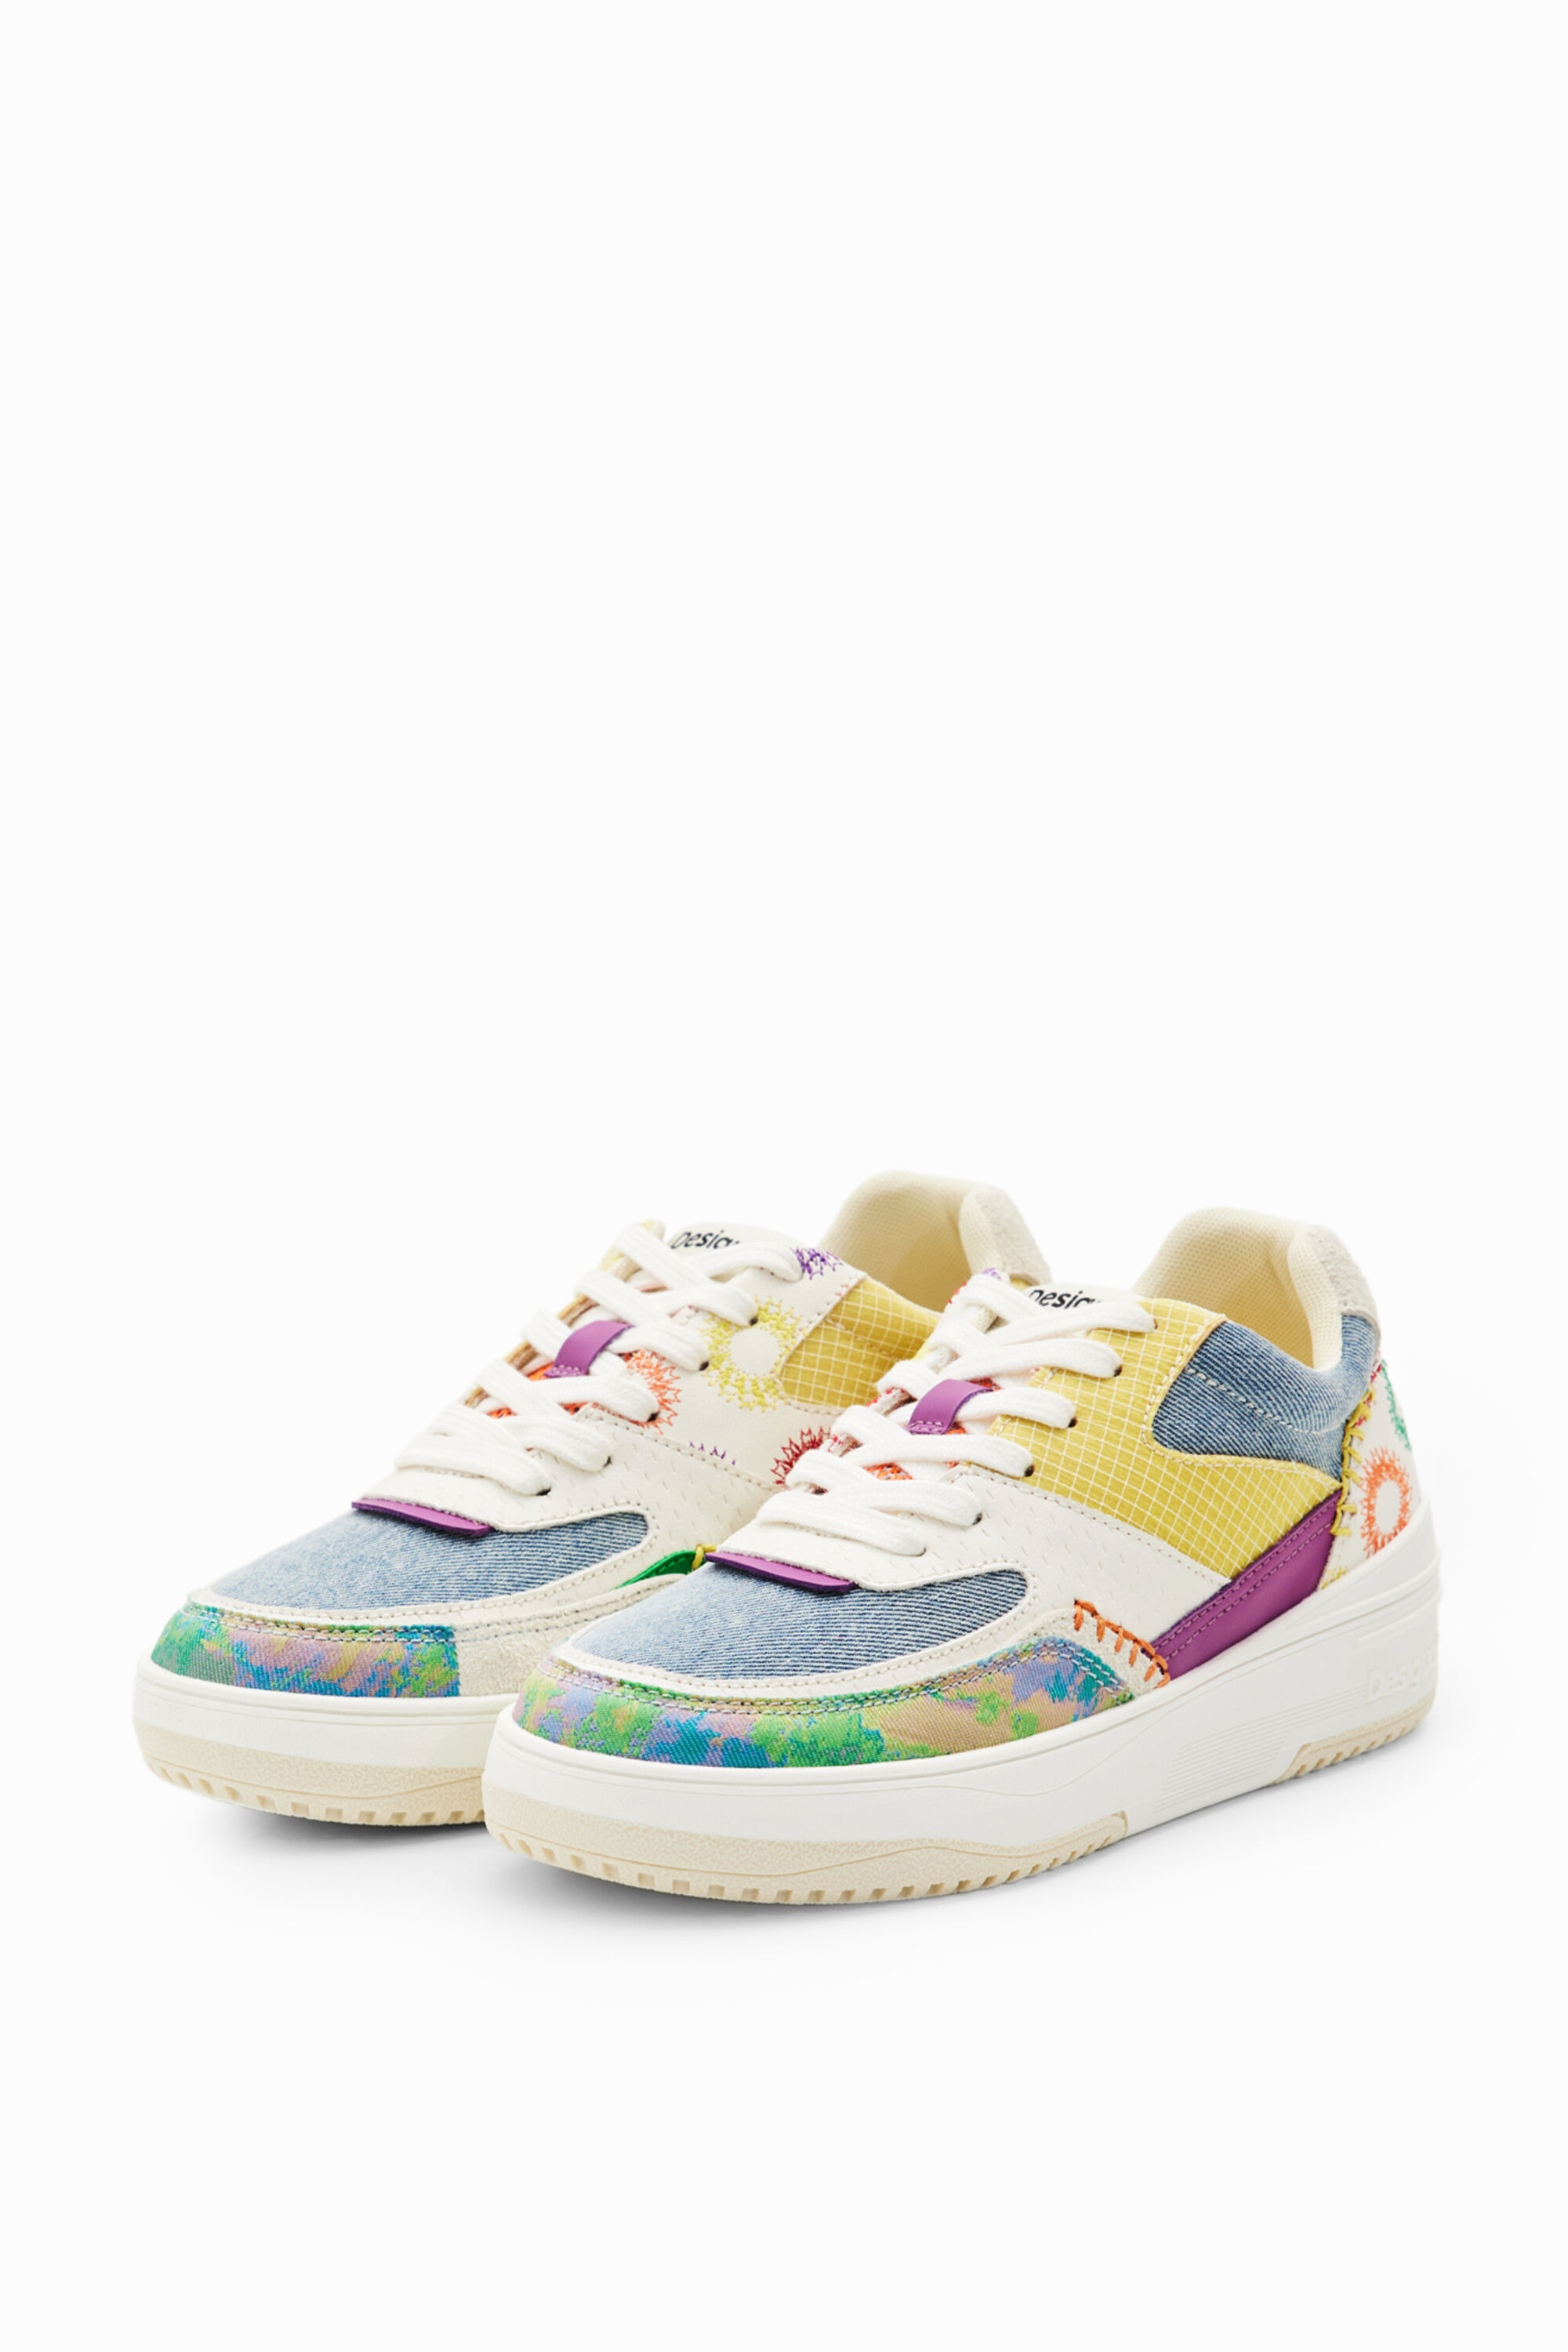 Desigual Retro multicolour patchwork sneakers